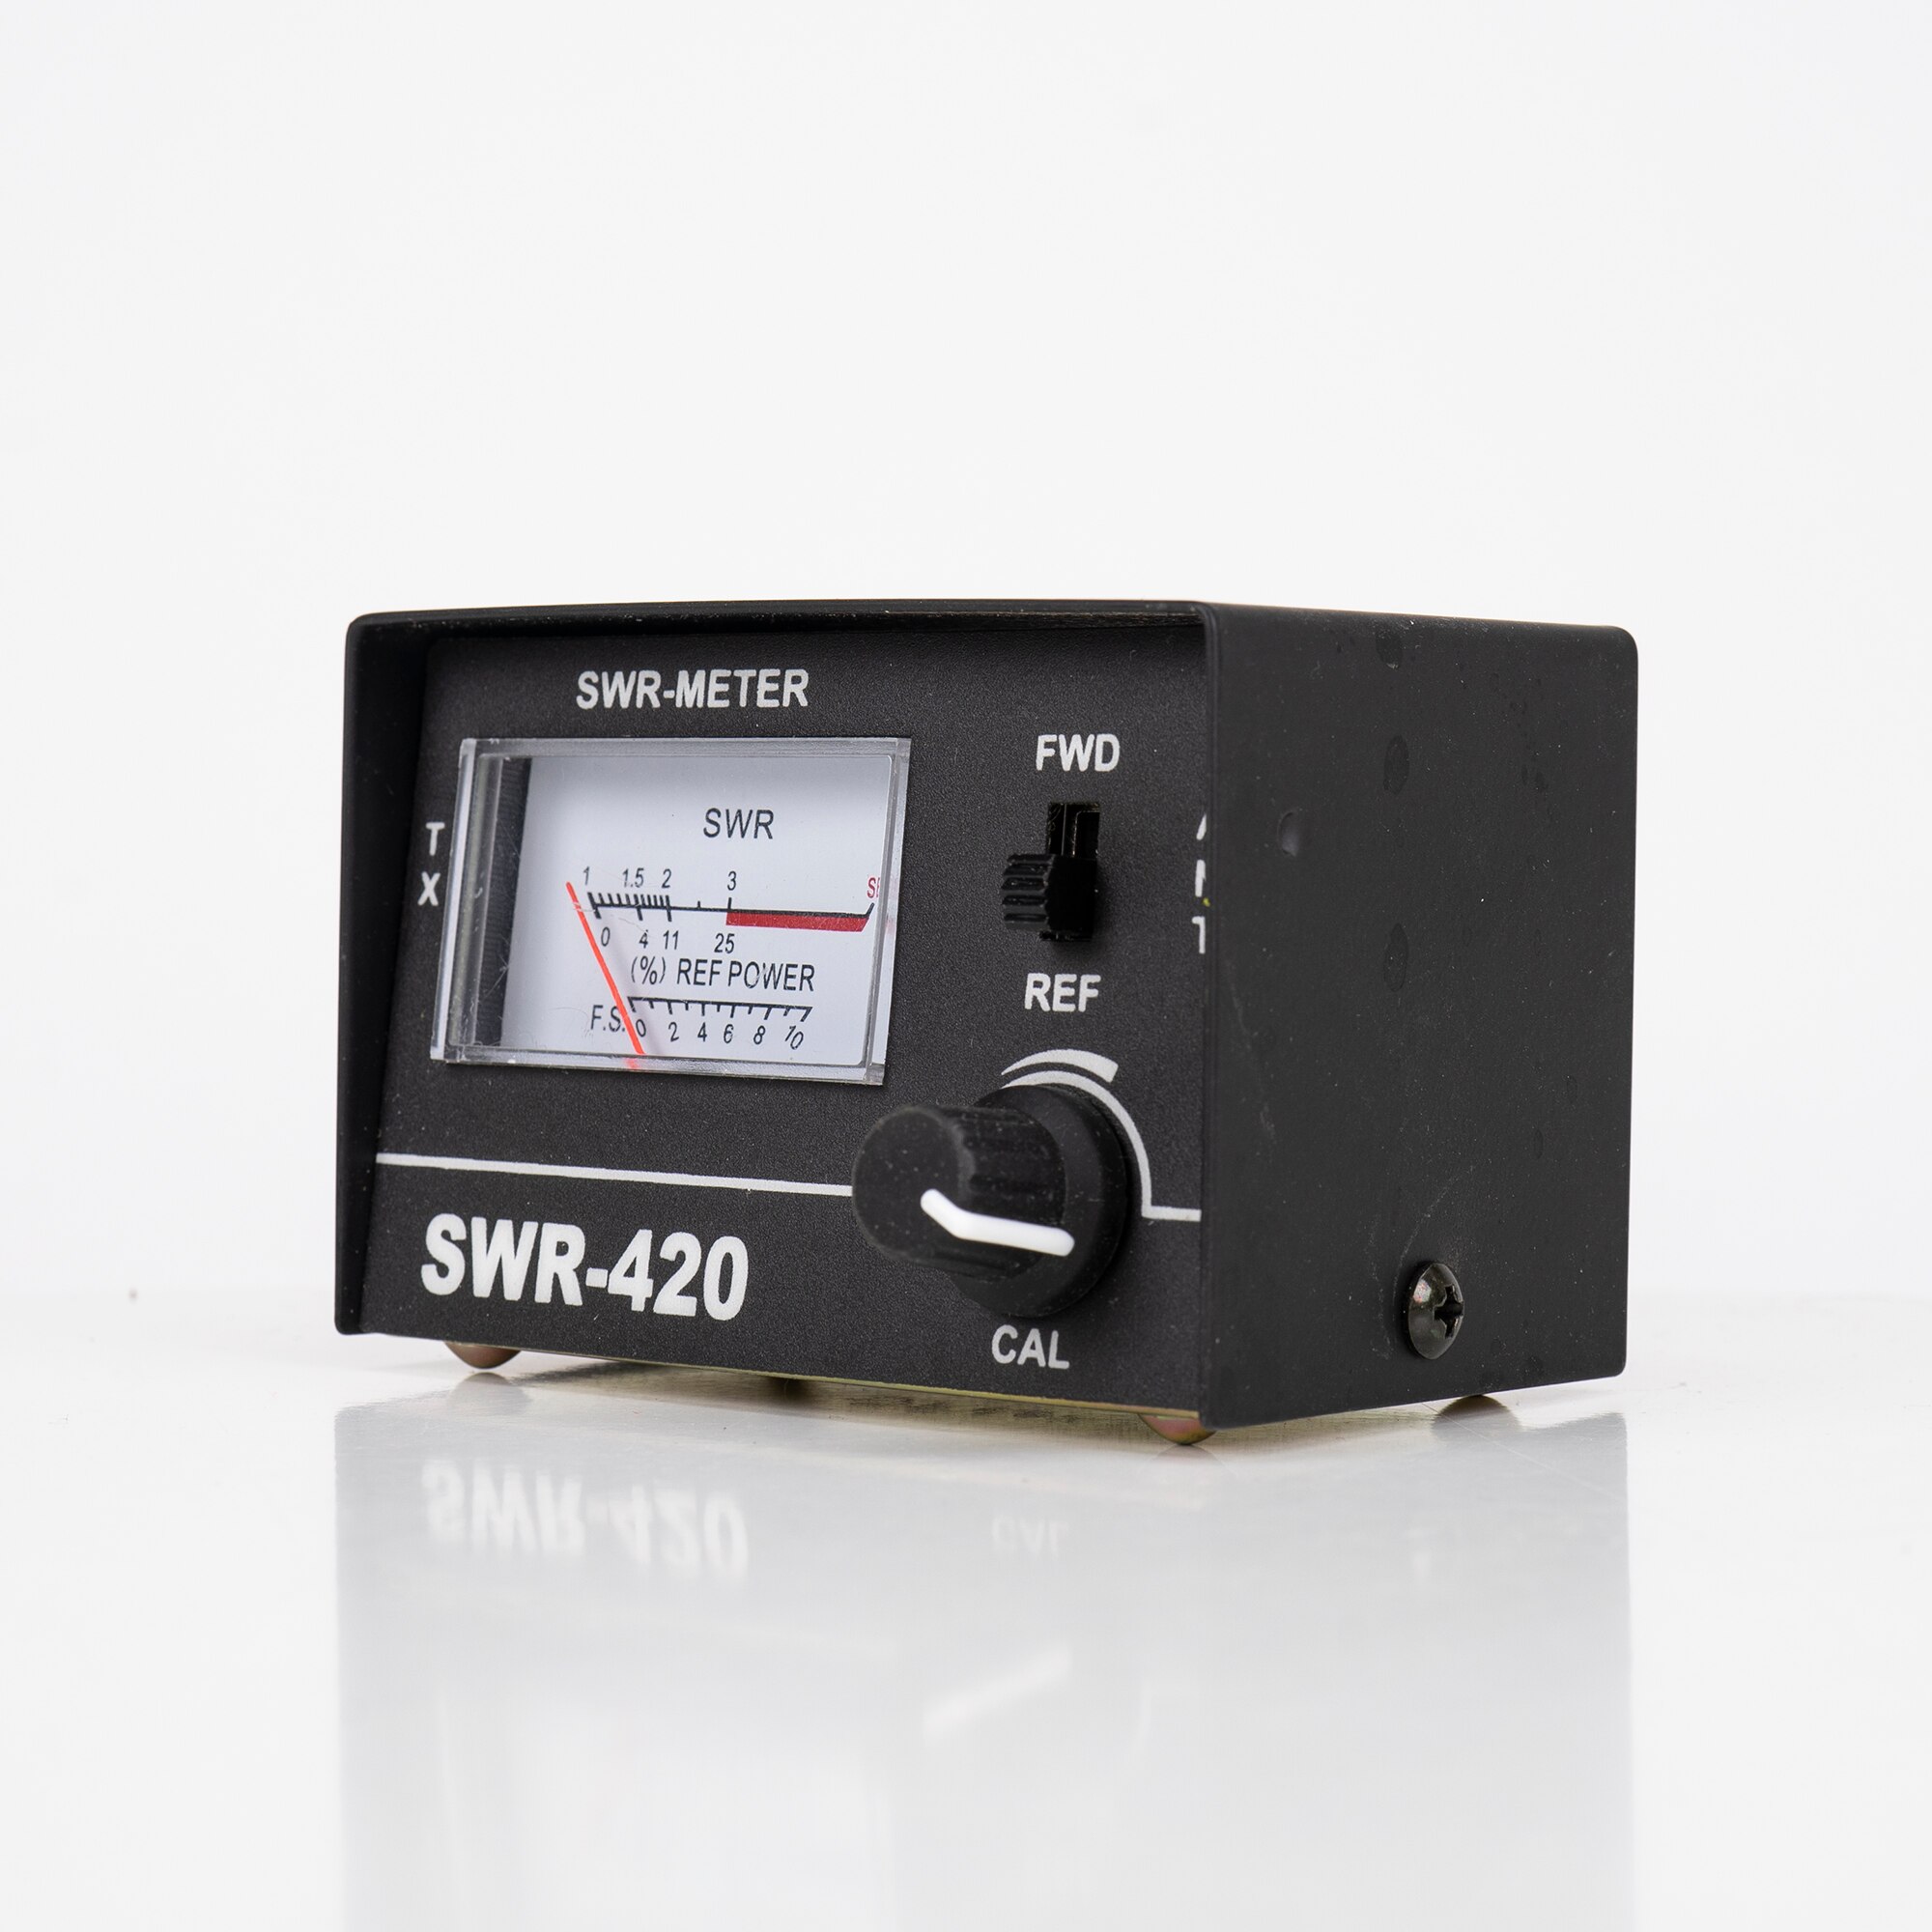 Rabbit Dexterity disappear Reflectometru PNI SWR-2463 pentru masurare SWR antene radio in frecventa  26-30Mhz - eMAG.ro